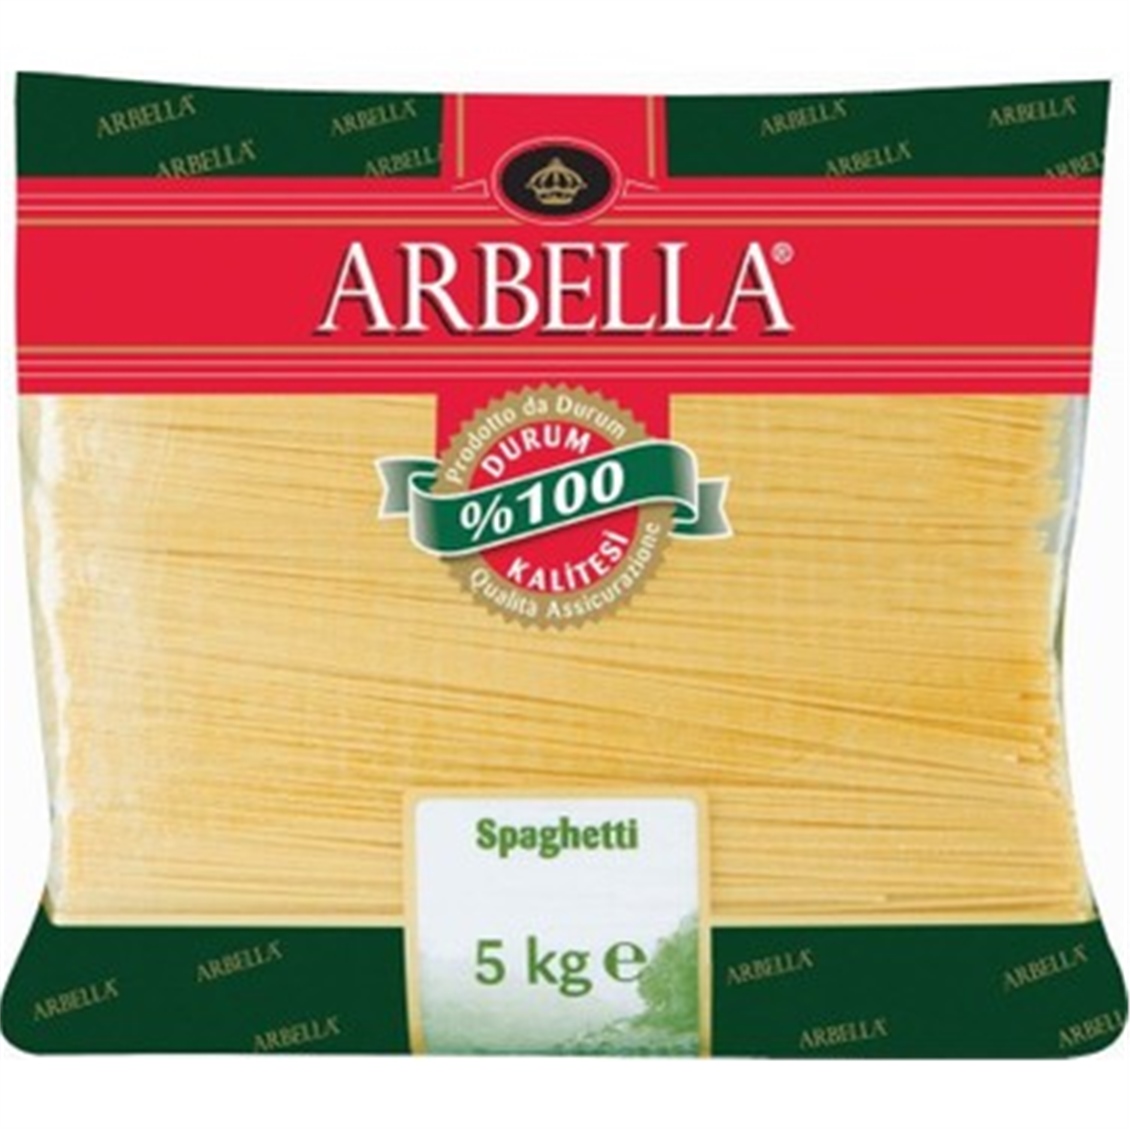 Arbella Spagetti Makarna 5 kg - Onur Market